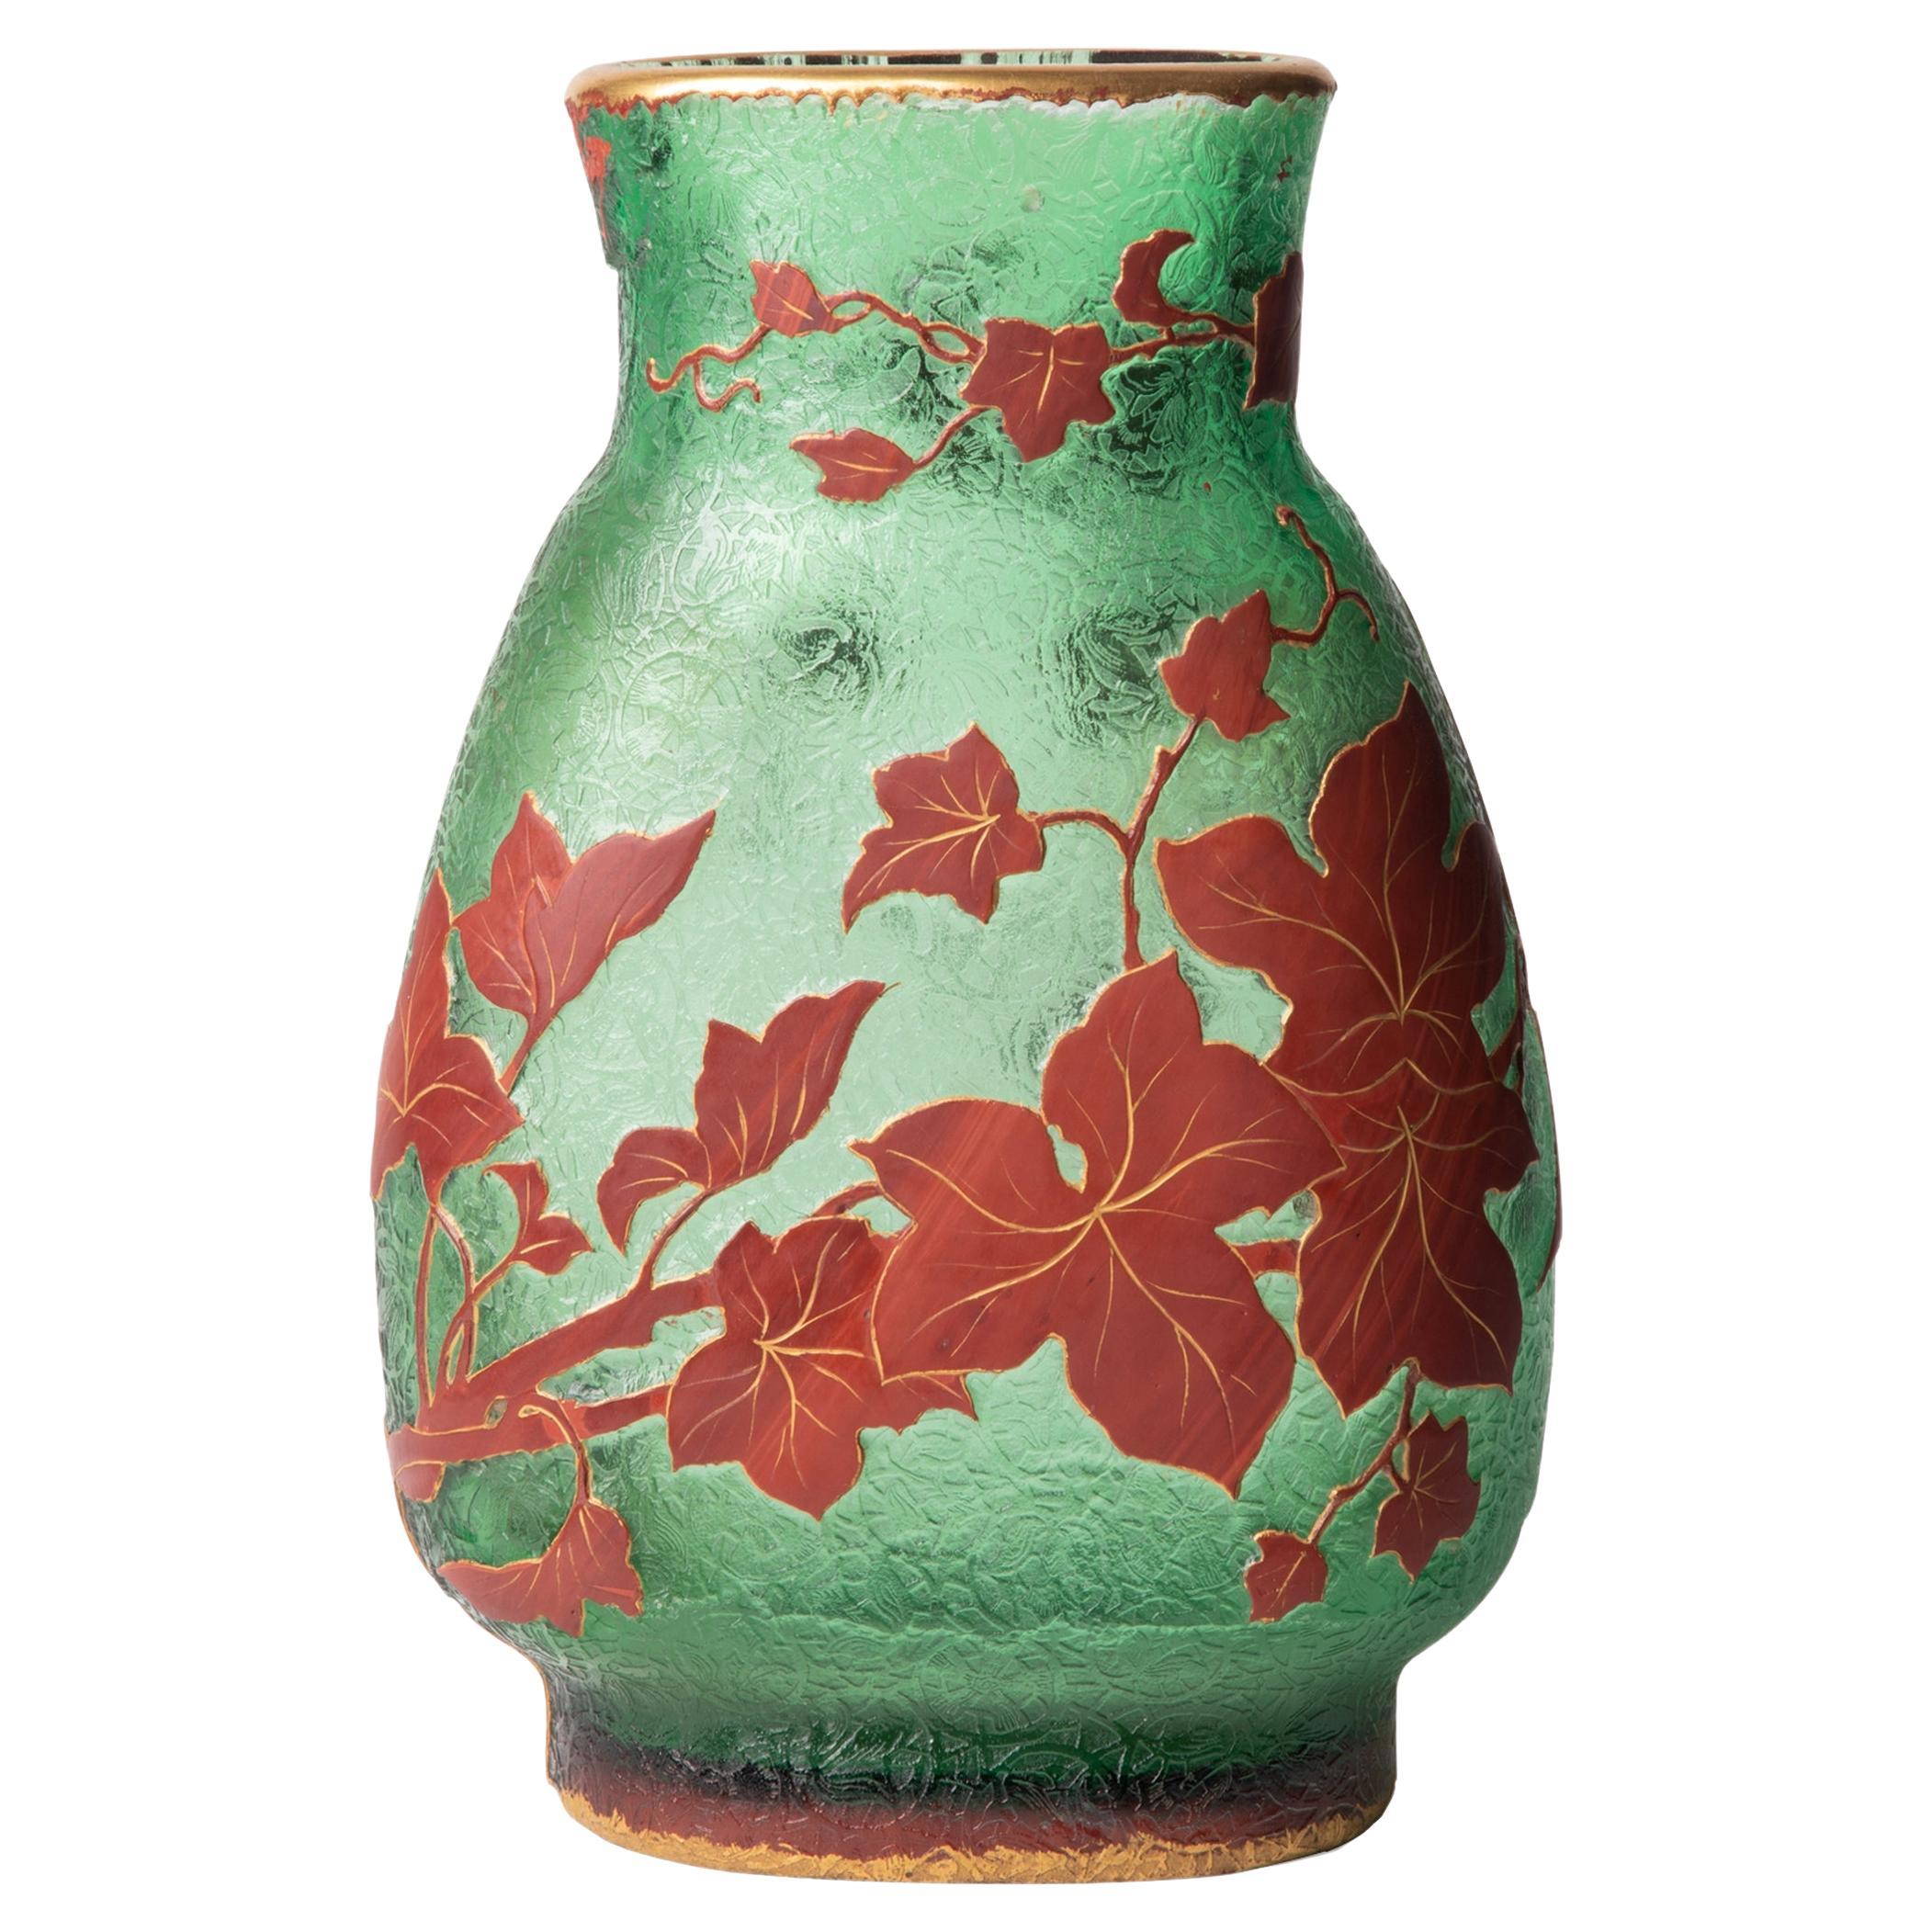 "Vine leaves" double glass vase by Daum